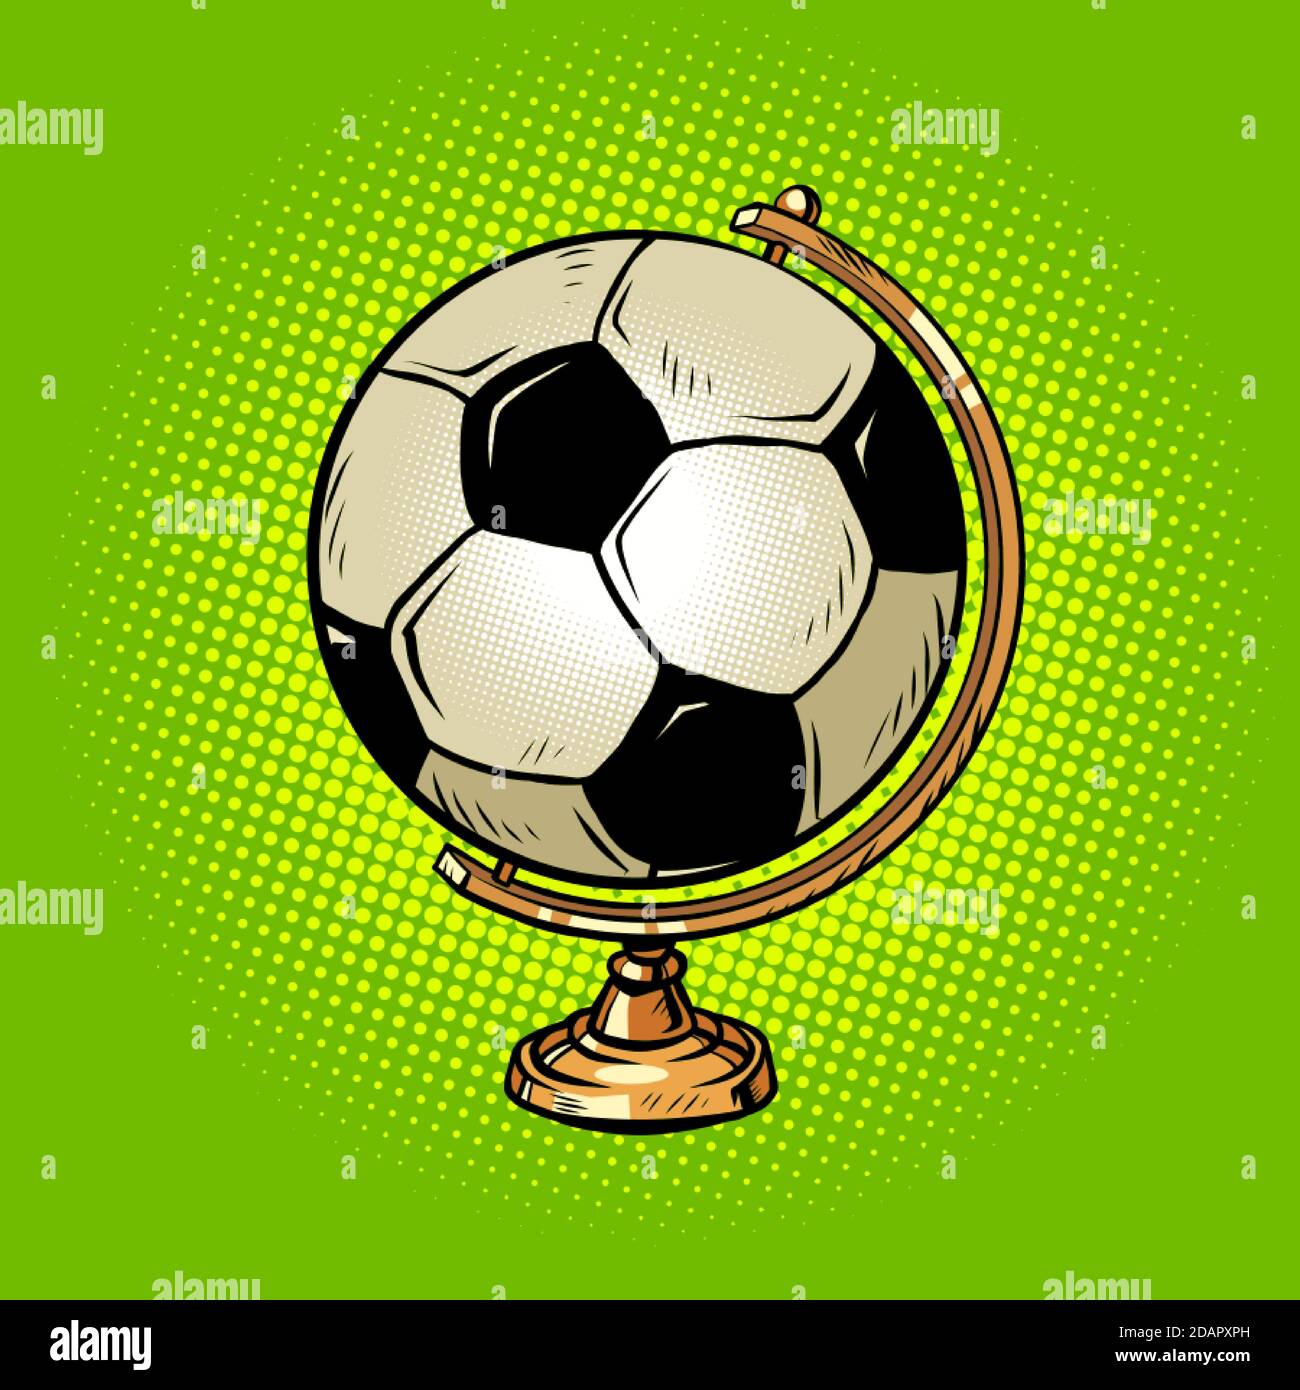 Globus internationalen Fußball, Fußball-Sportausrüstung Stock Vektor